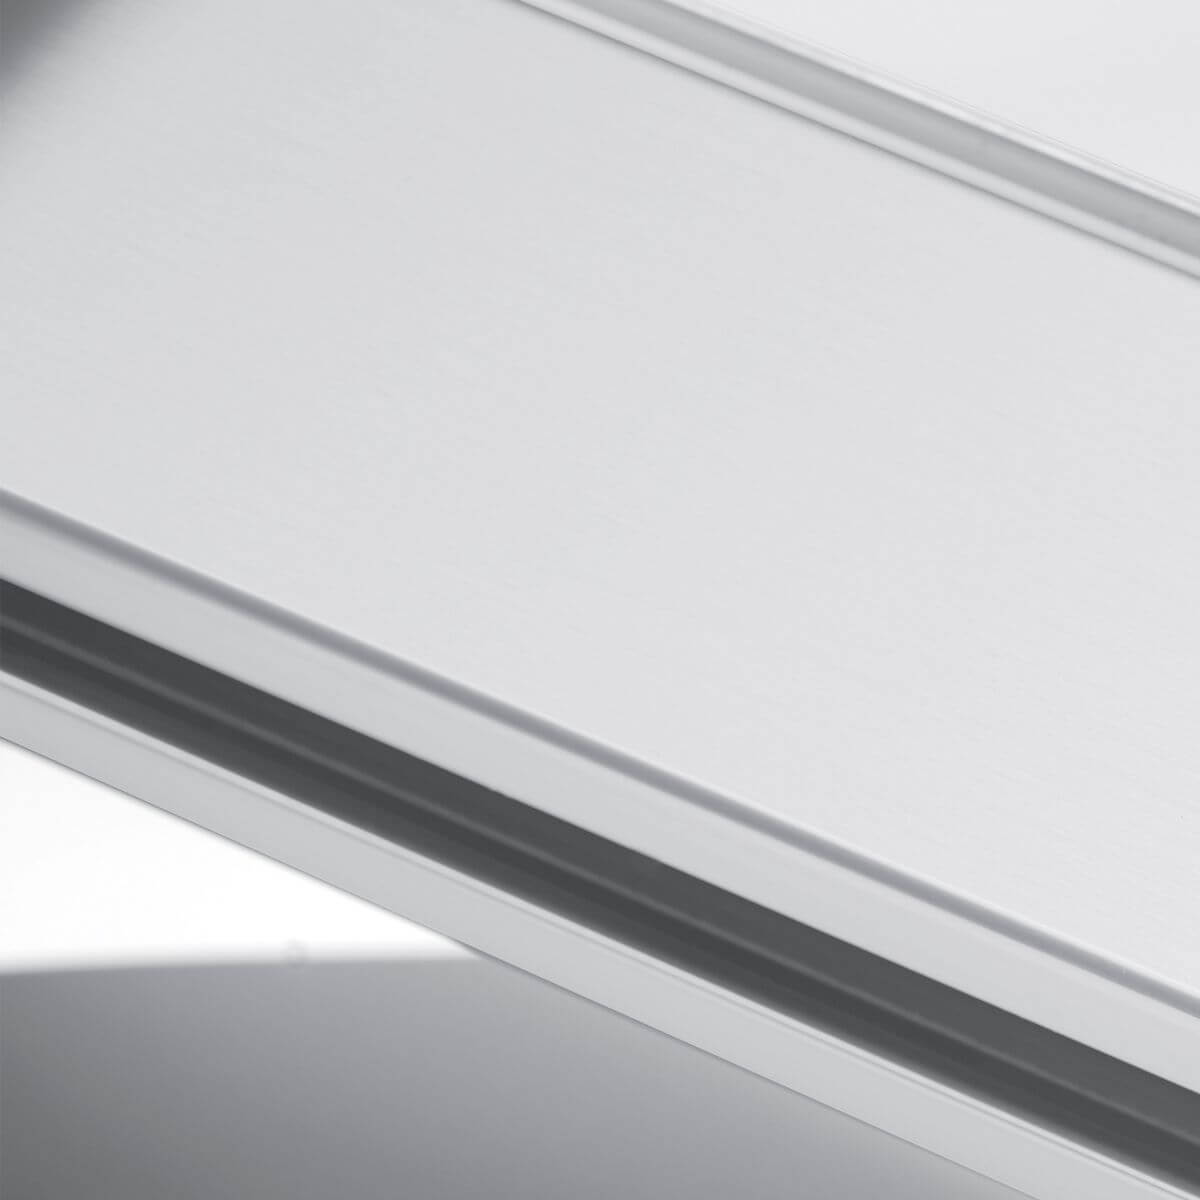 Finish aluminium white ral 9010 for glass wall